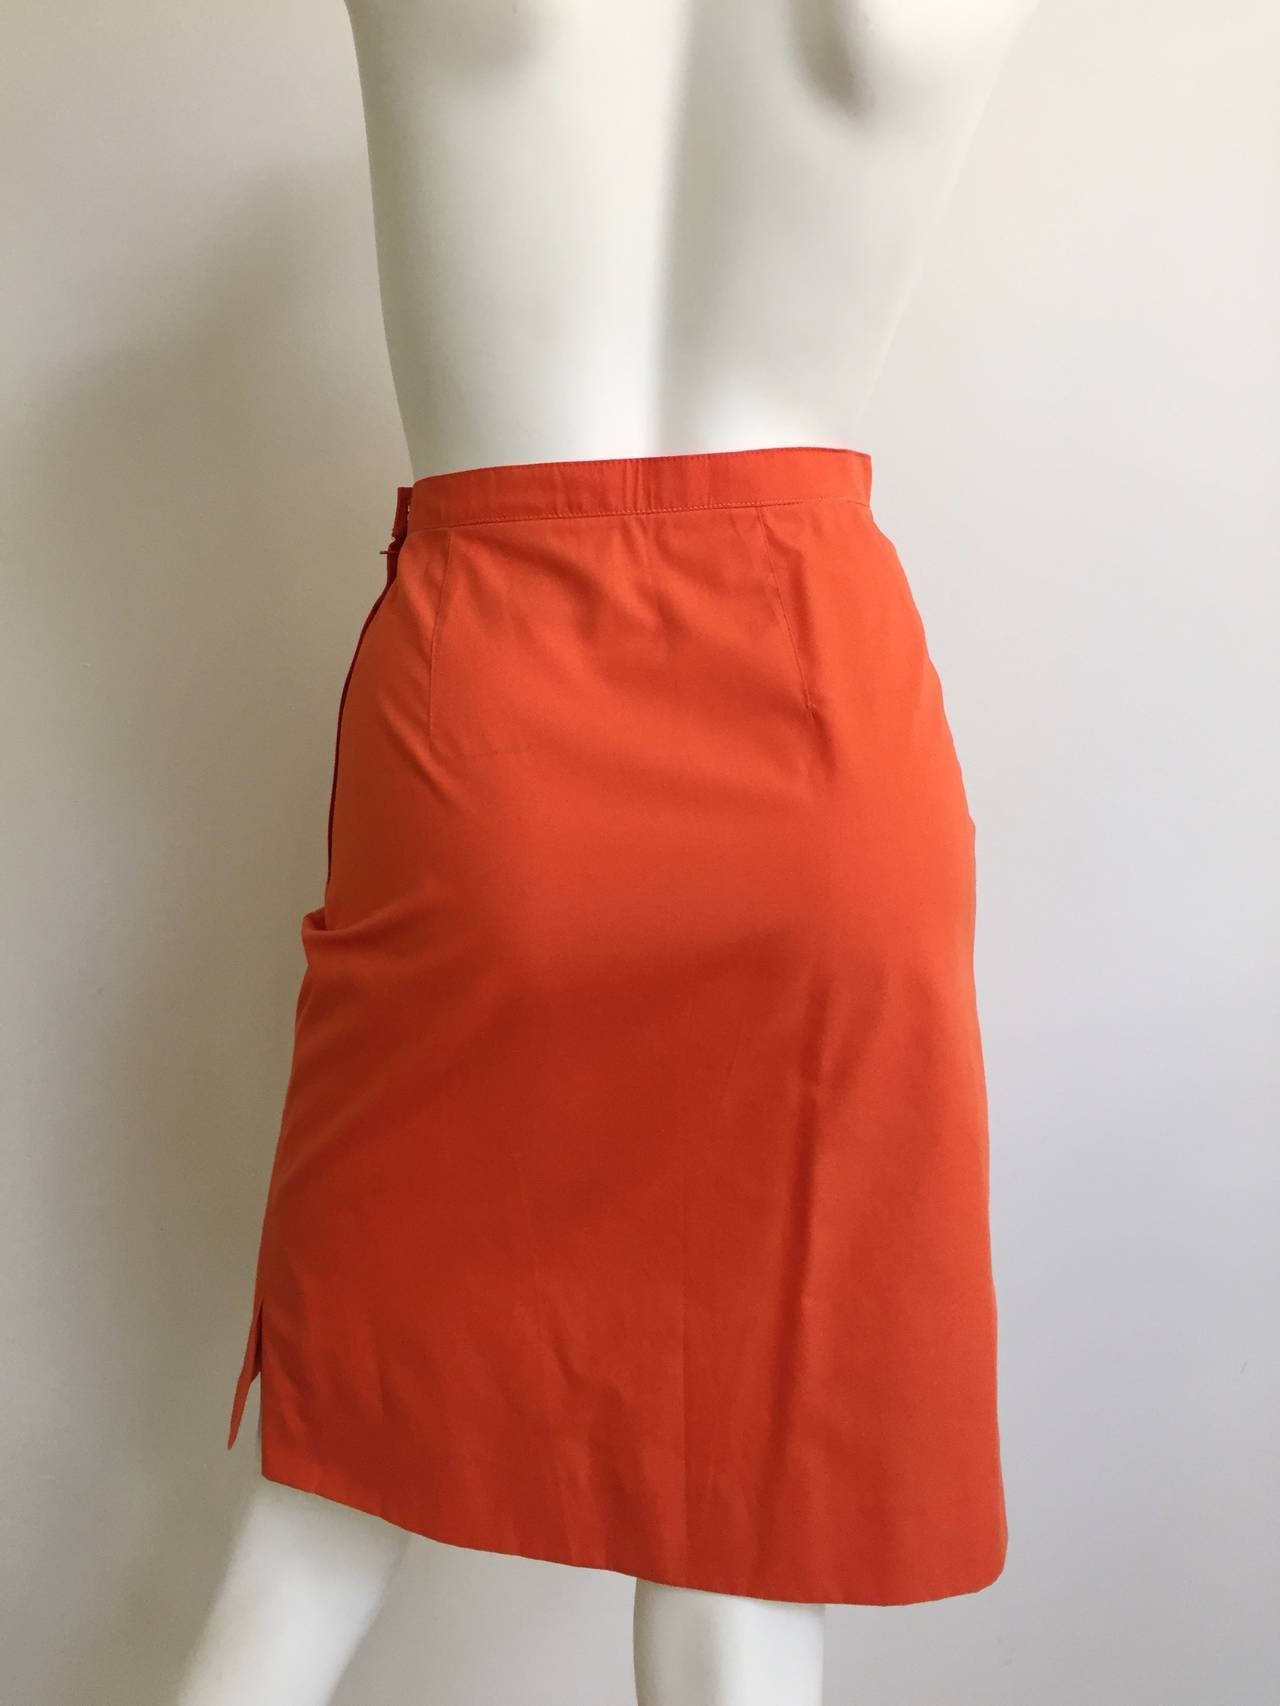 Courreges Orange Cotton Skirt With Pockets  1